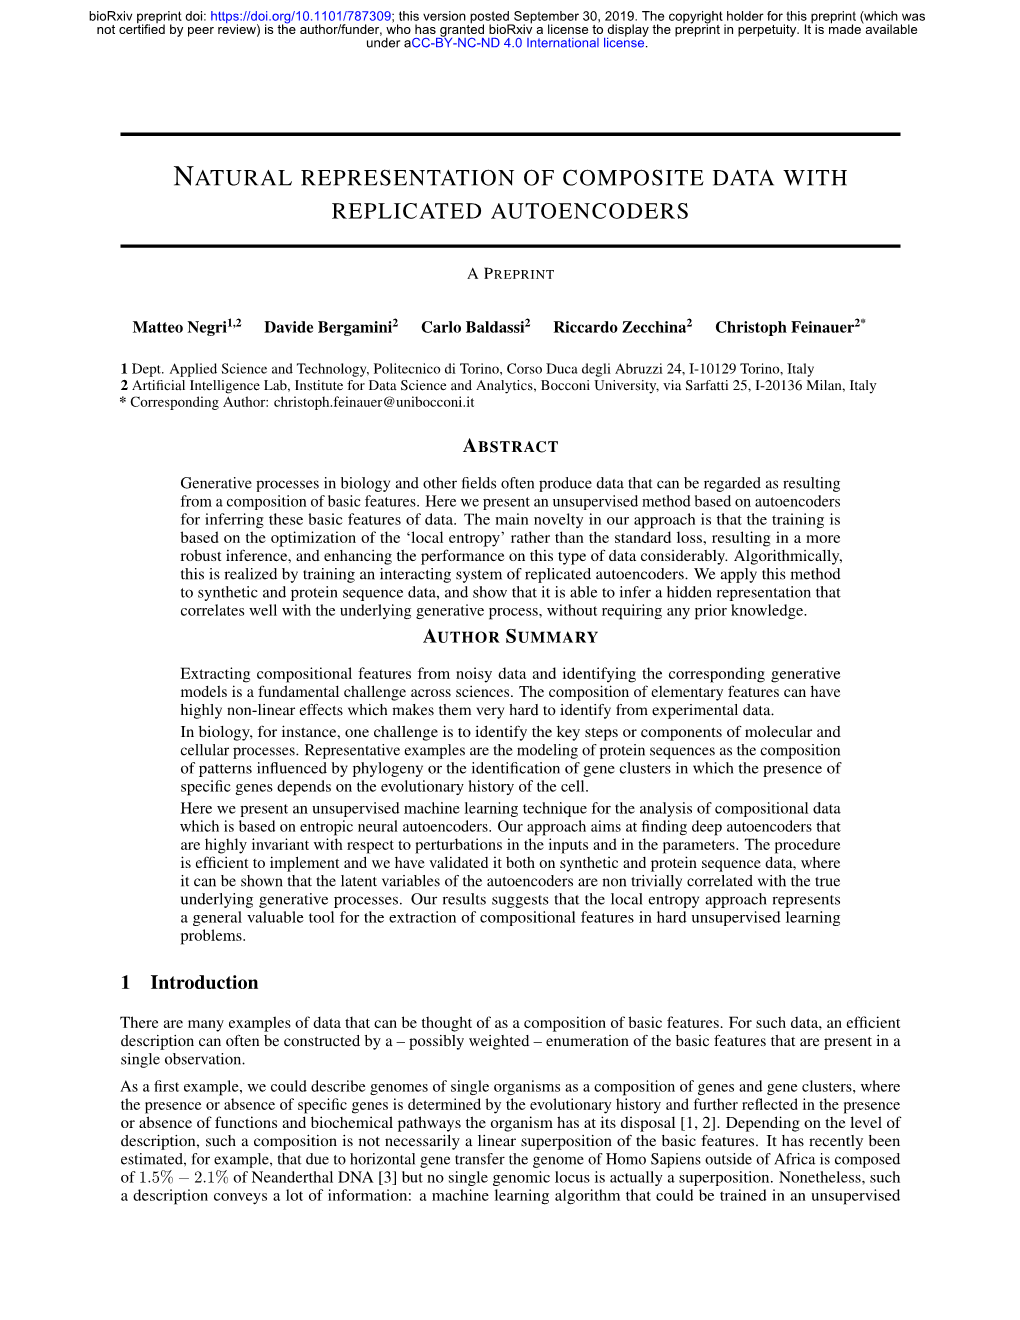 Natural Representation of Composite Data with Replicated Autoencoders APREPRINT